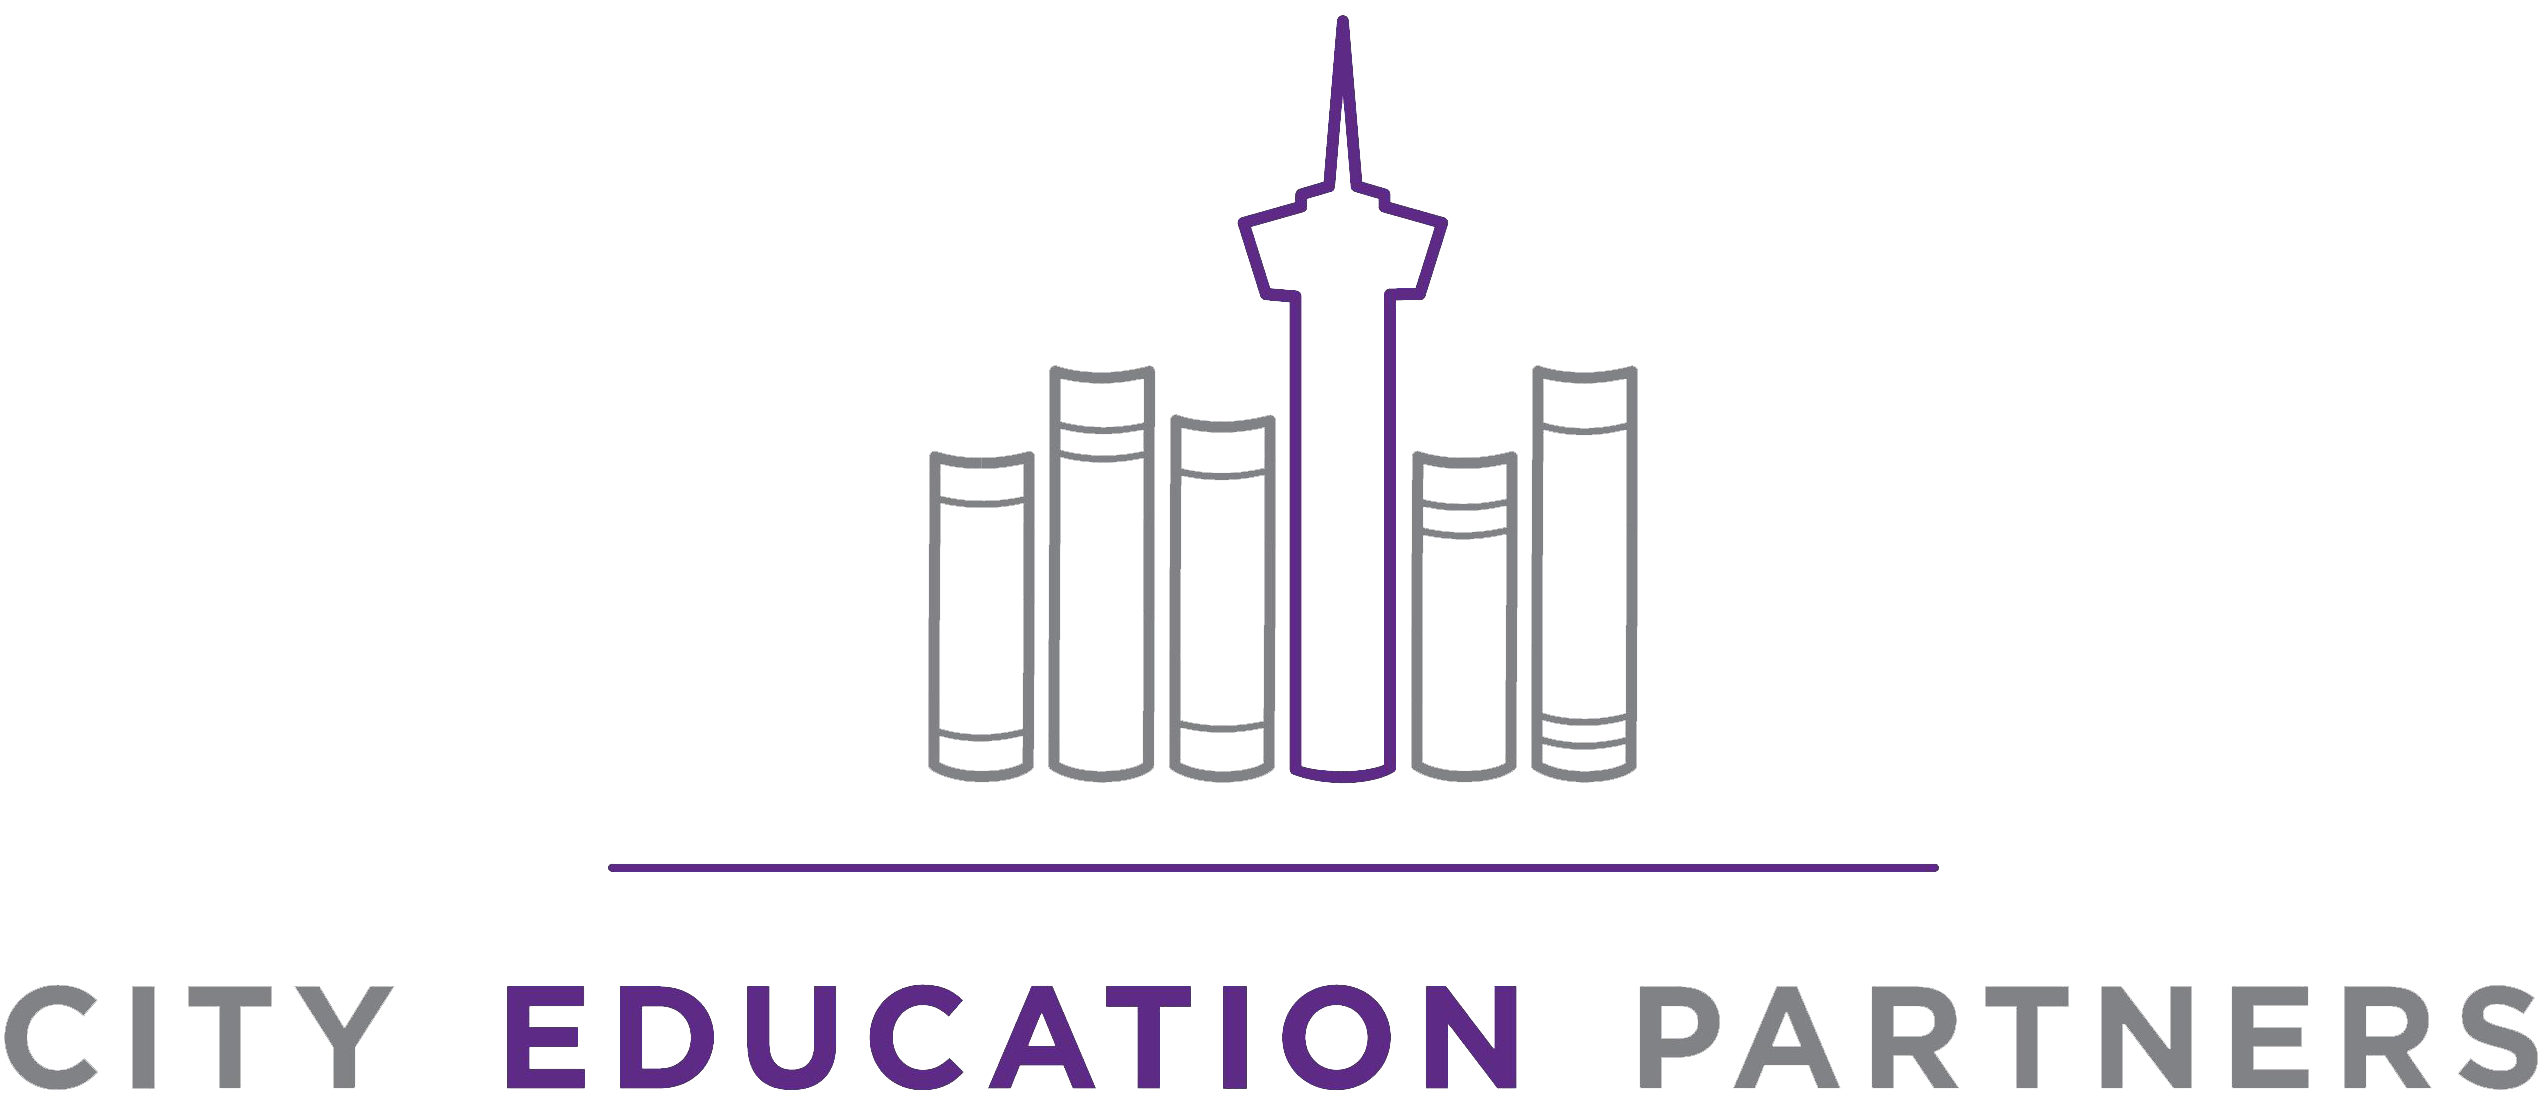 City Education Partners